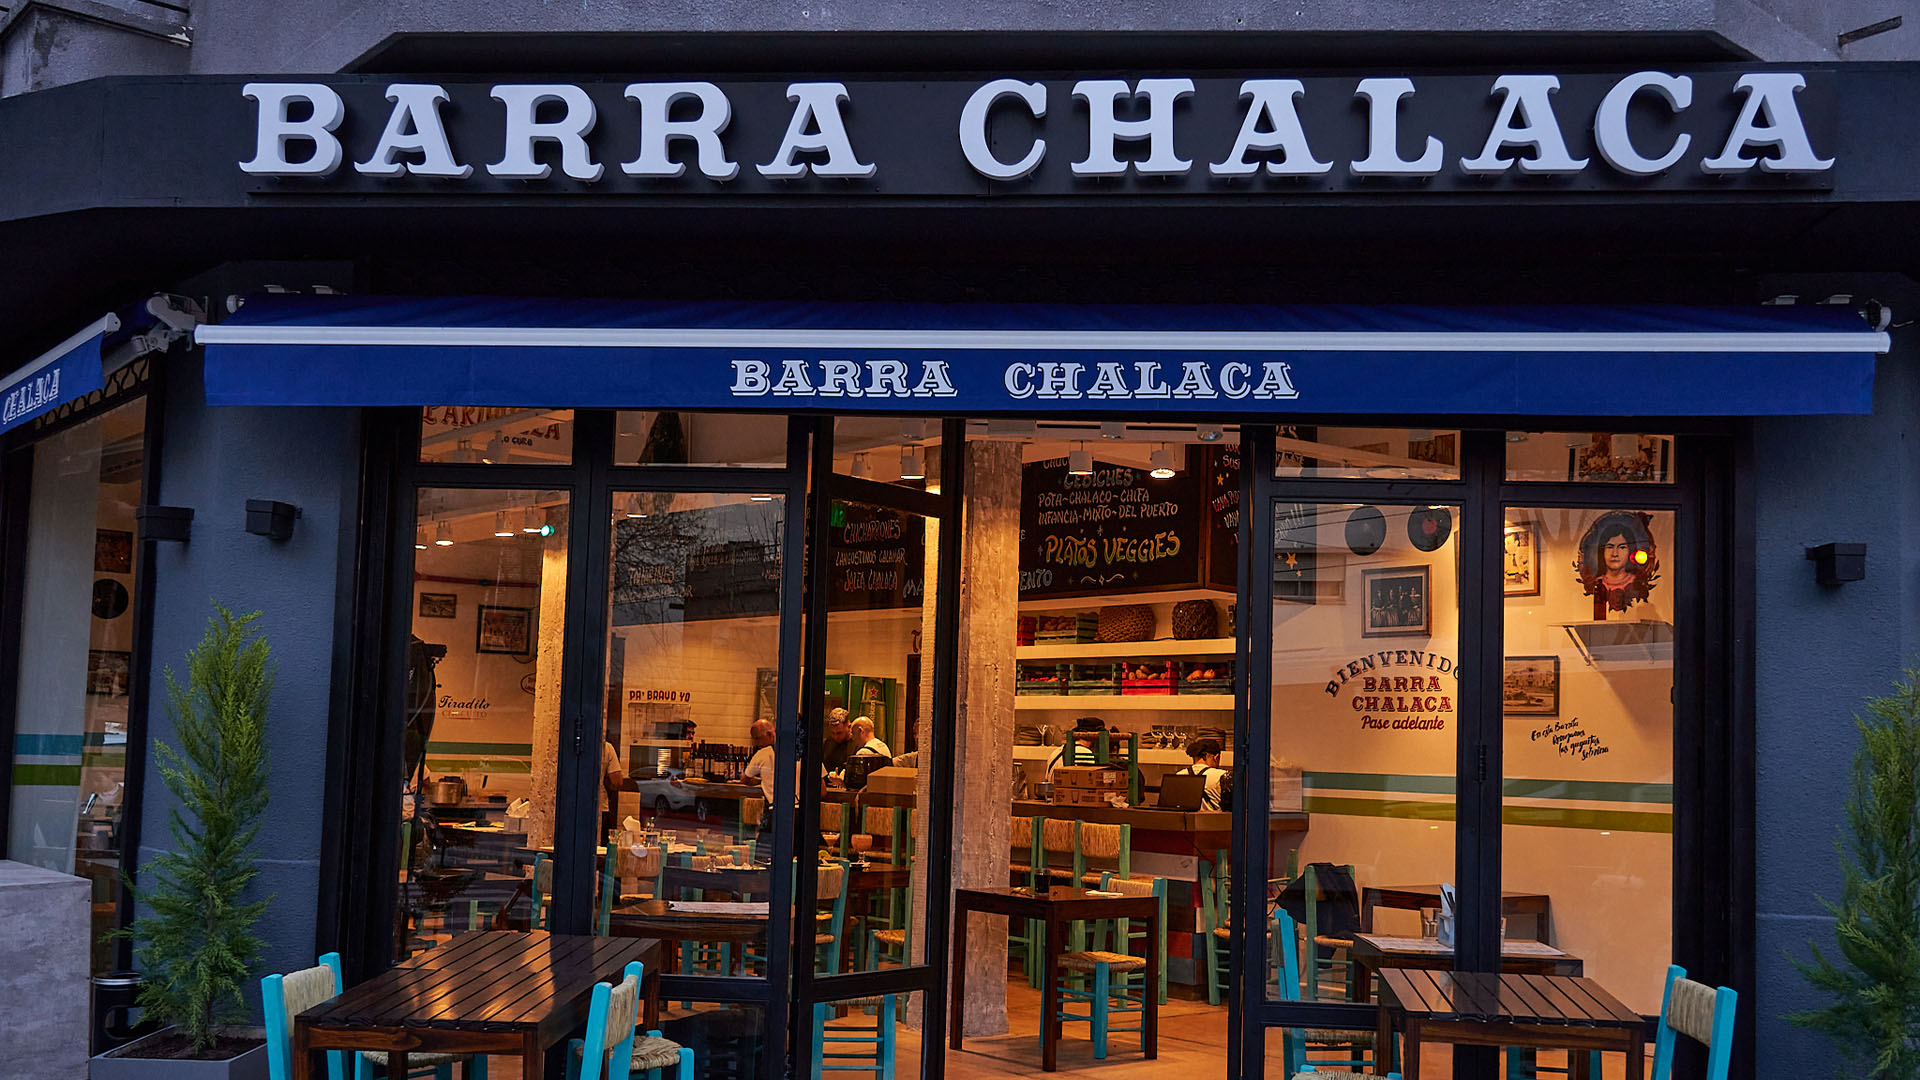 Barra Chalaca